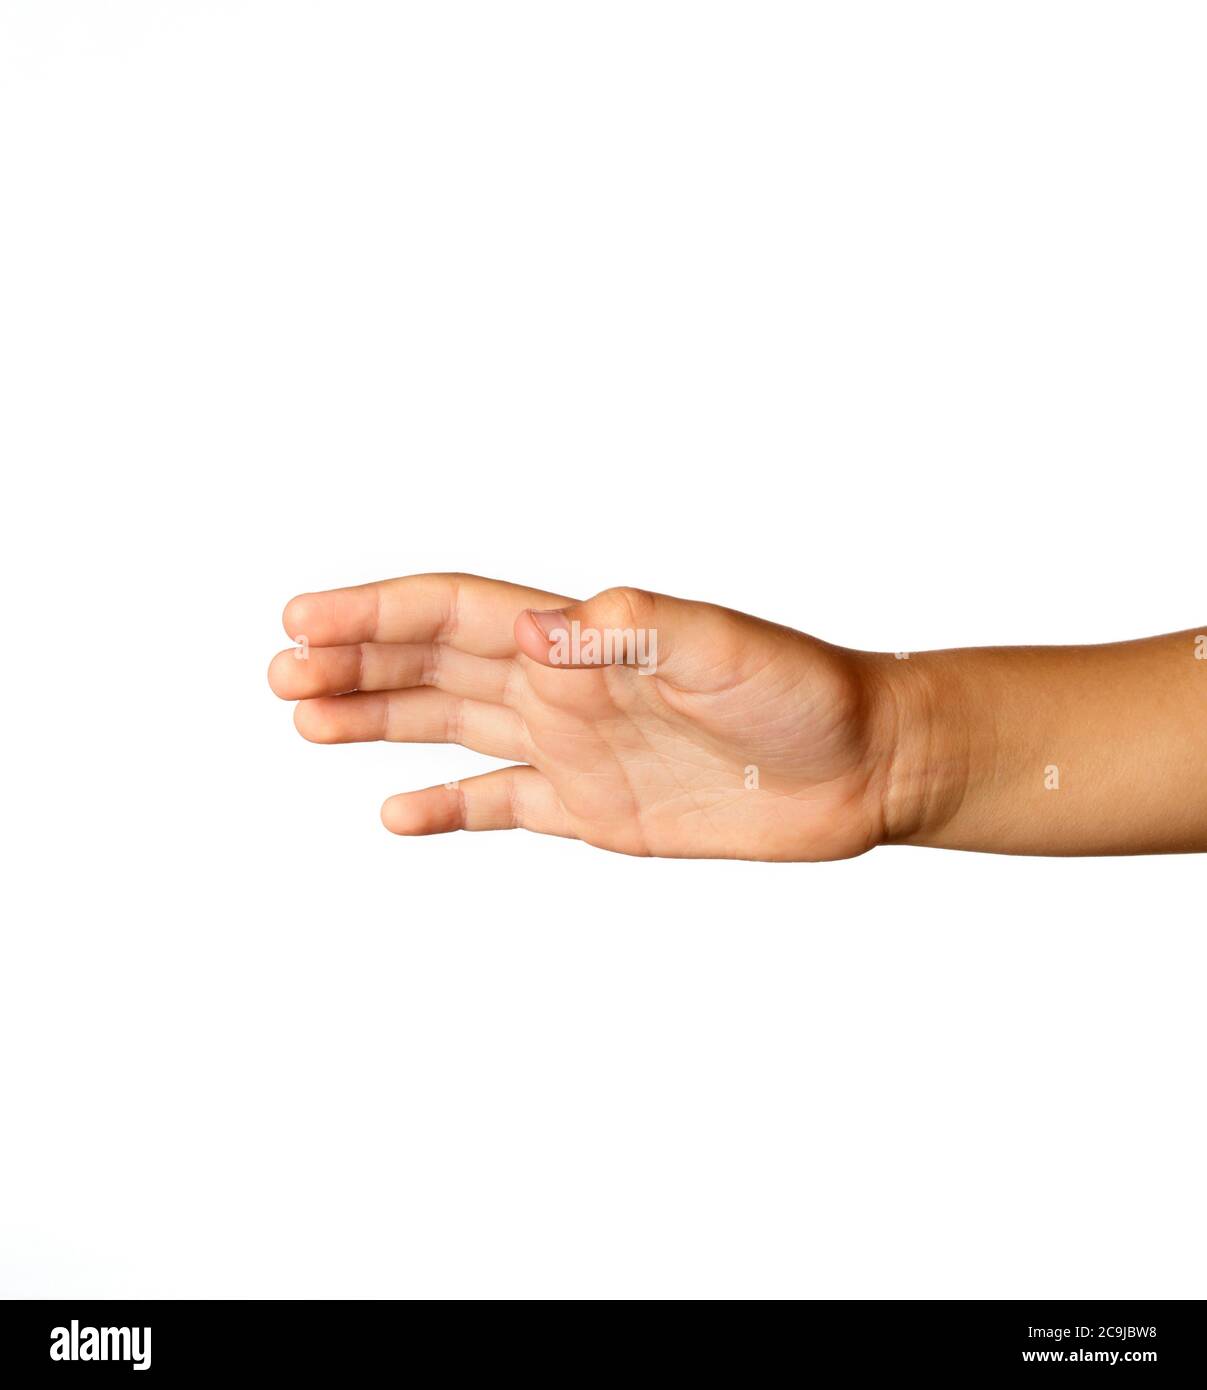 Child's hand against a plain white background. Stock Photo